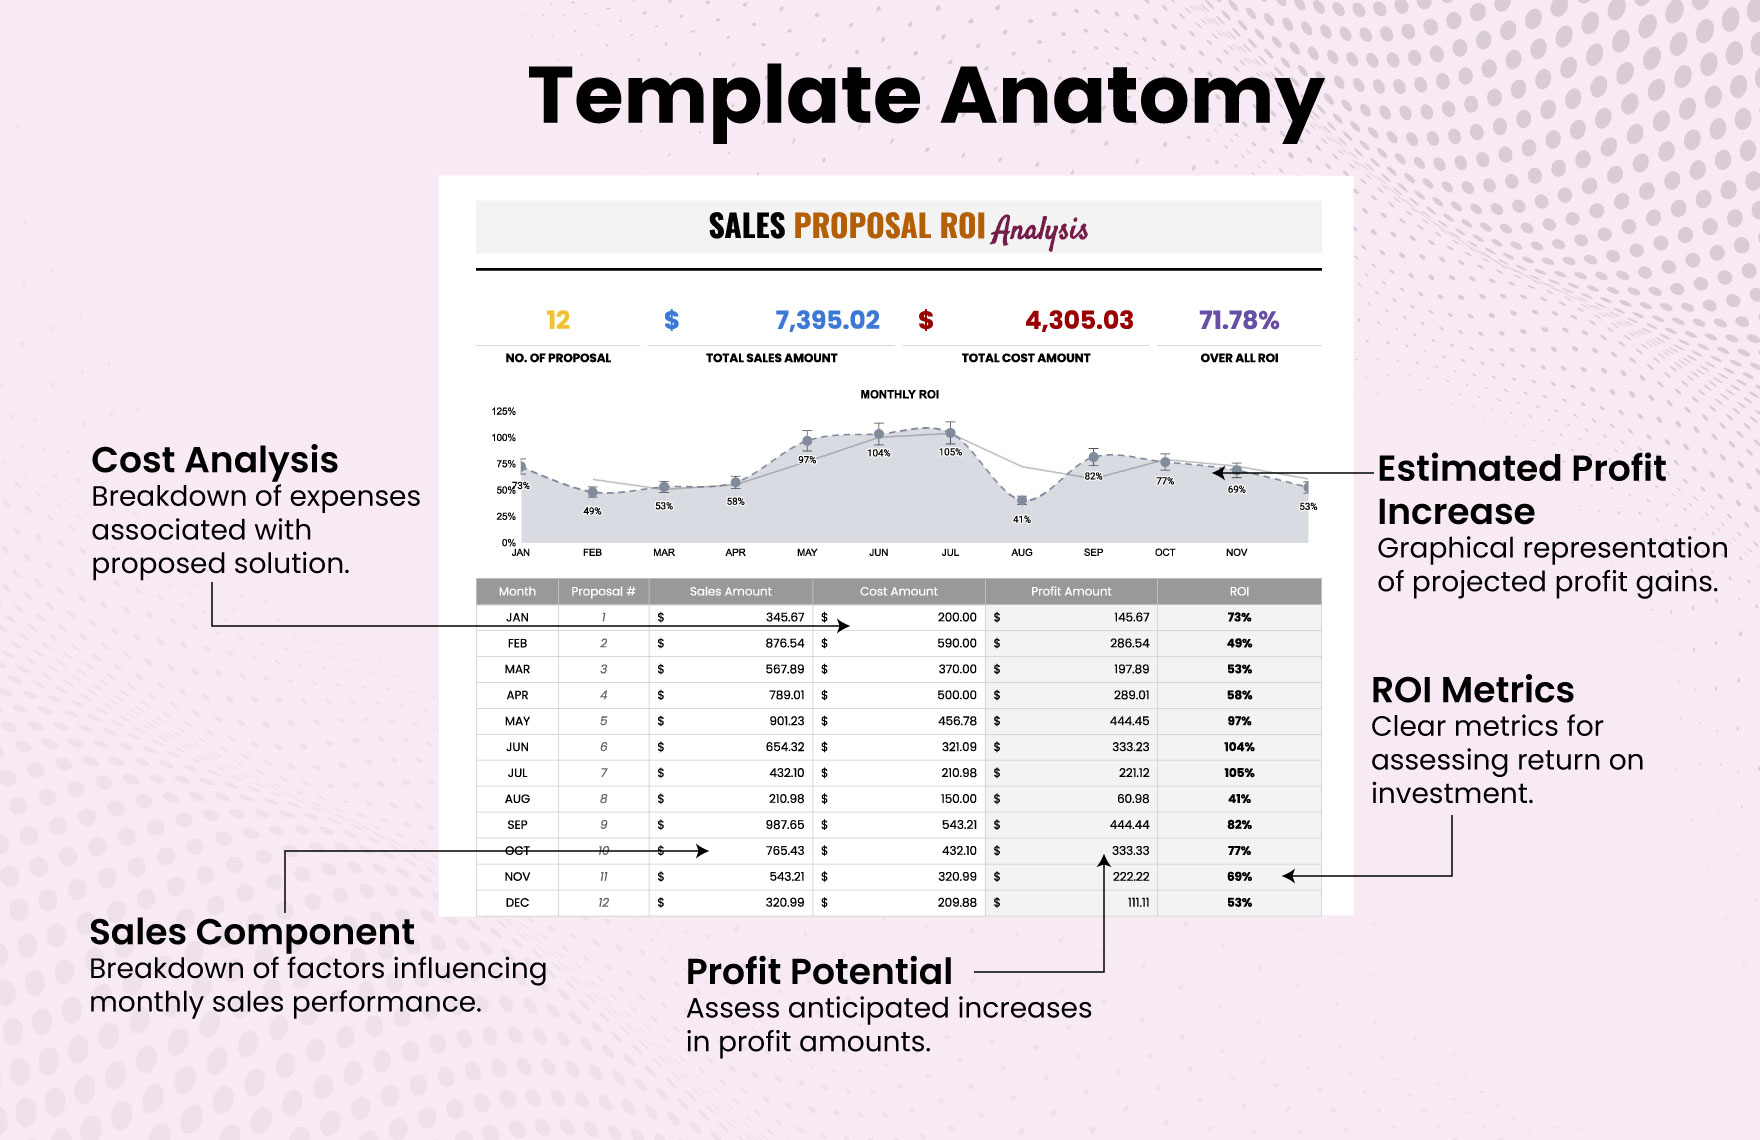 Sales Proposal ROI Analysis Template